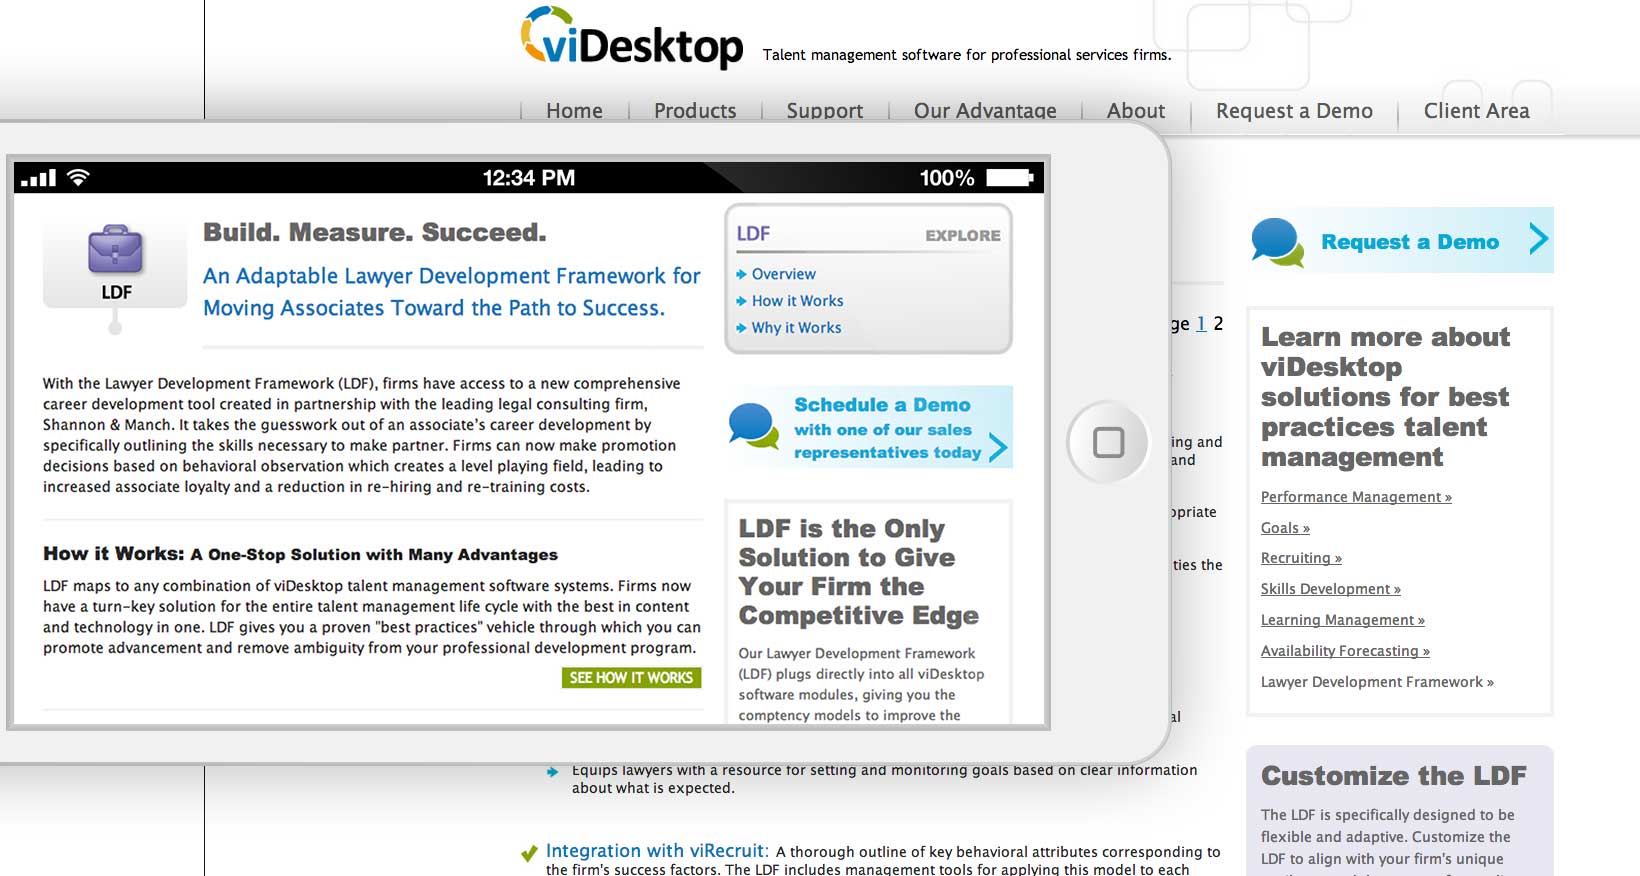 viDesktop Website Design - Content Page in a Smartphone